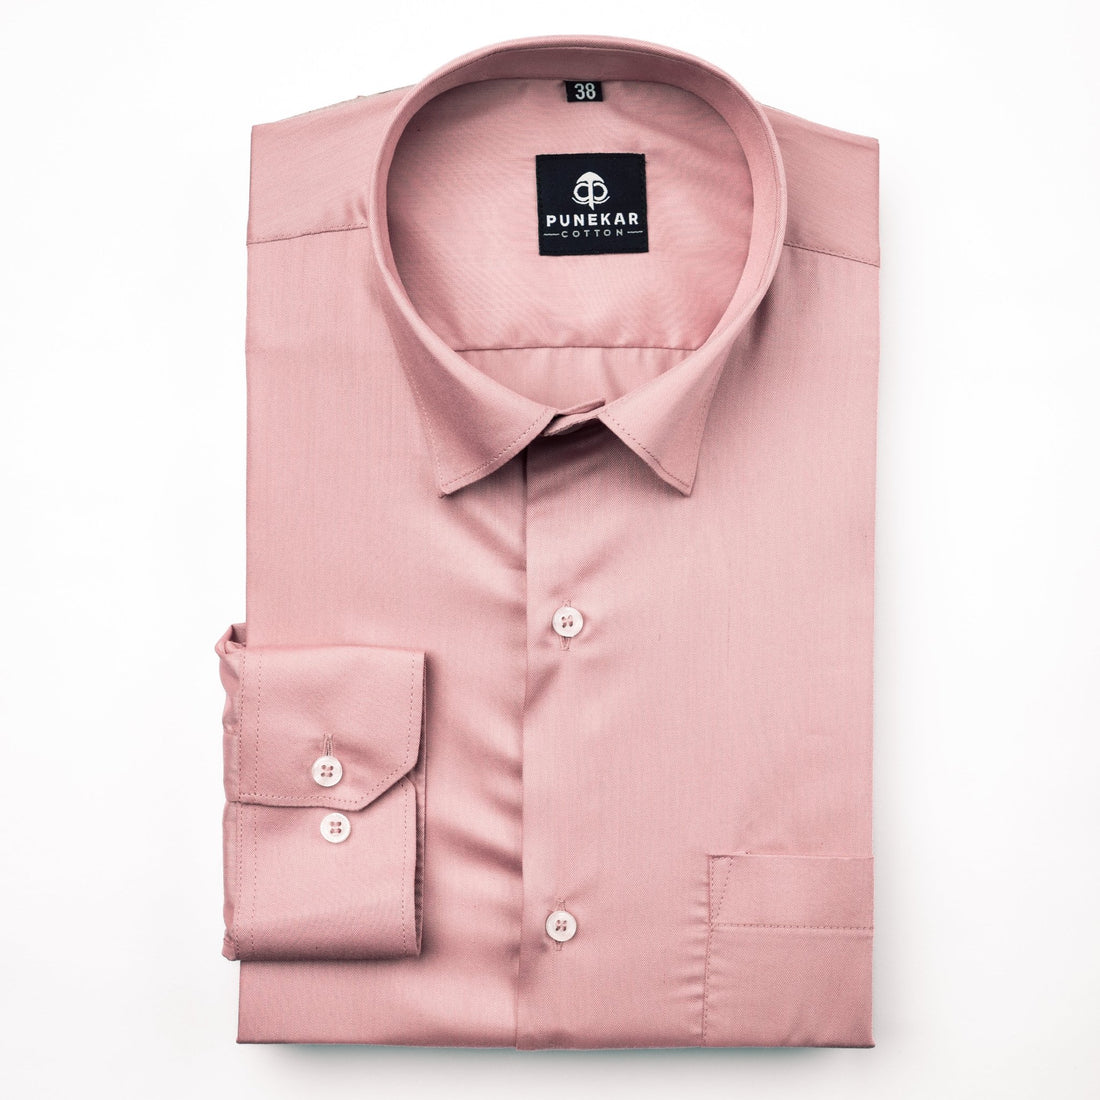 Light Pink Soft Satin Cotton Shirt For Men - Punekar Cotton